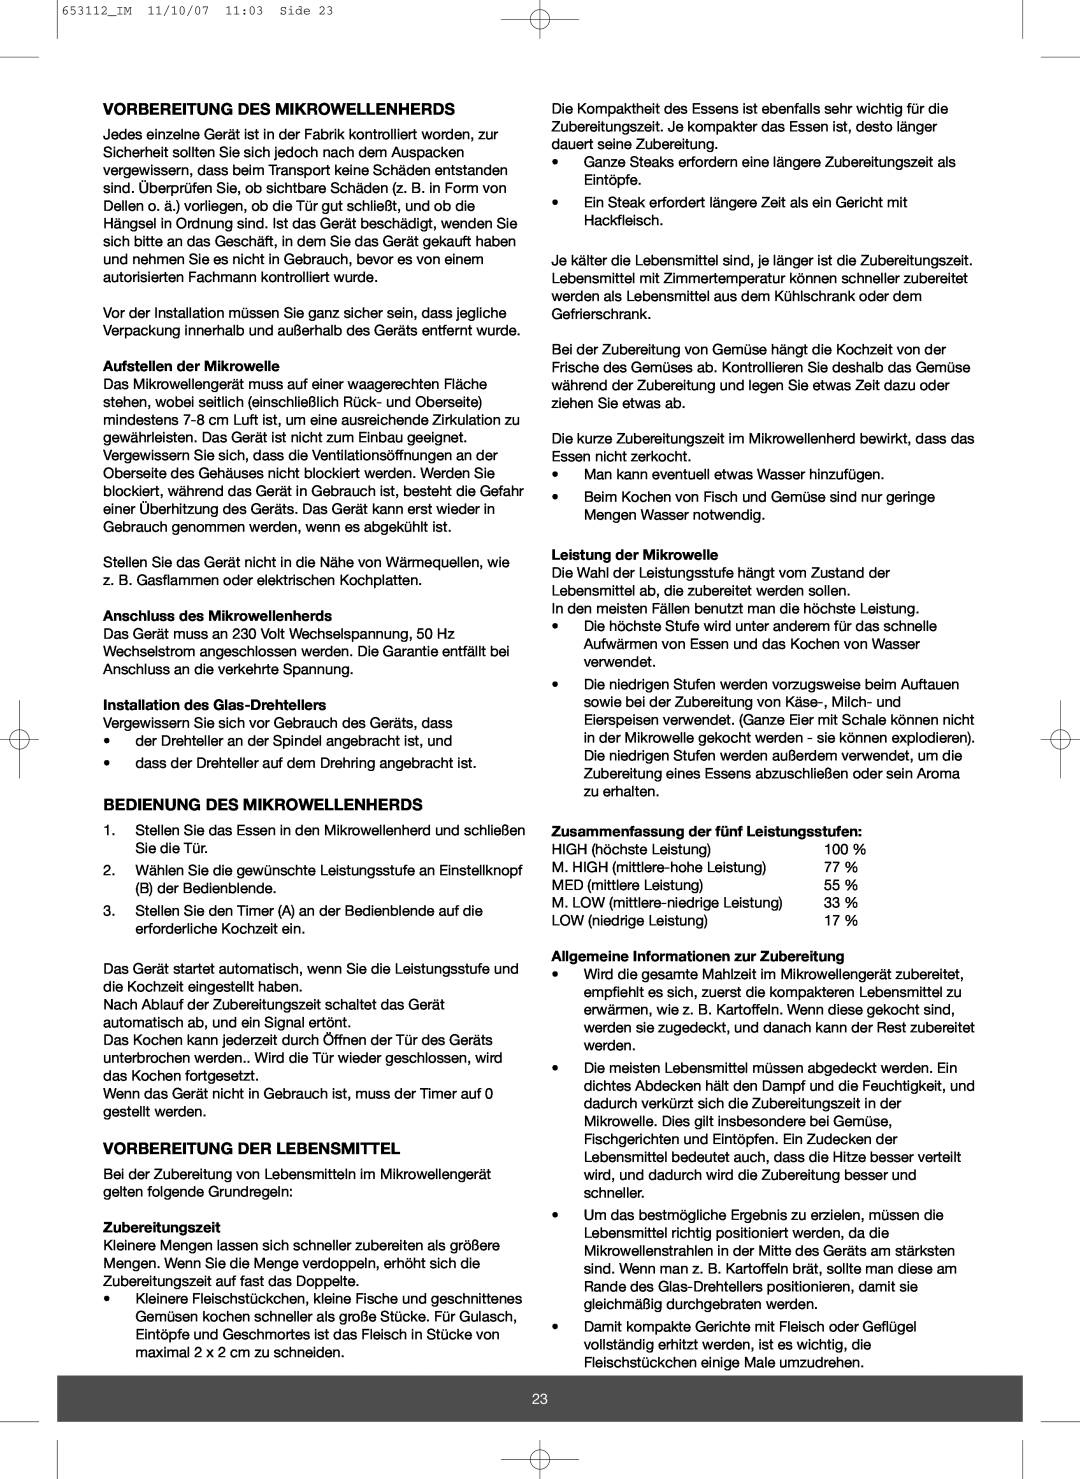 Melissa 653-115 manual Vorbereitung Des Mikrowellenherds, Bedienung Des Mikrowellenherds, Vorbereitung Der Lebensmittel 